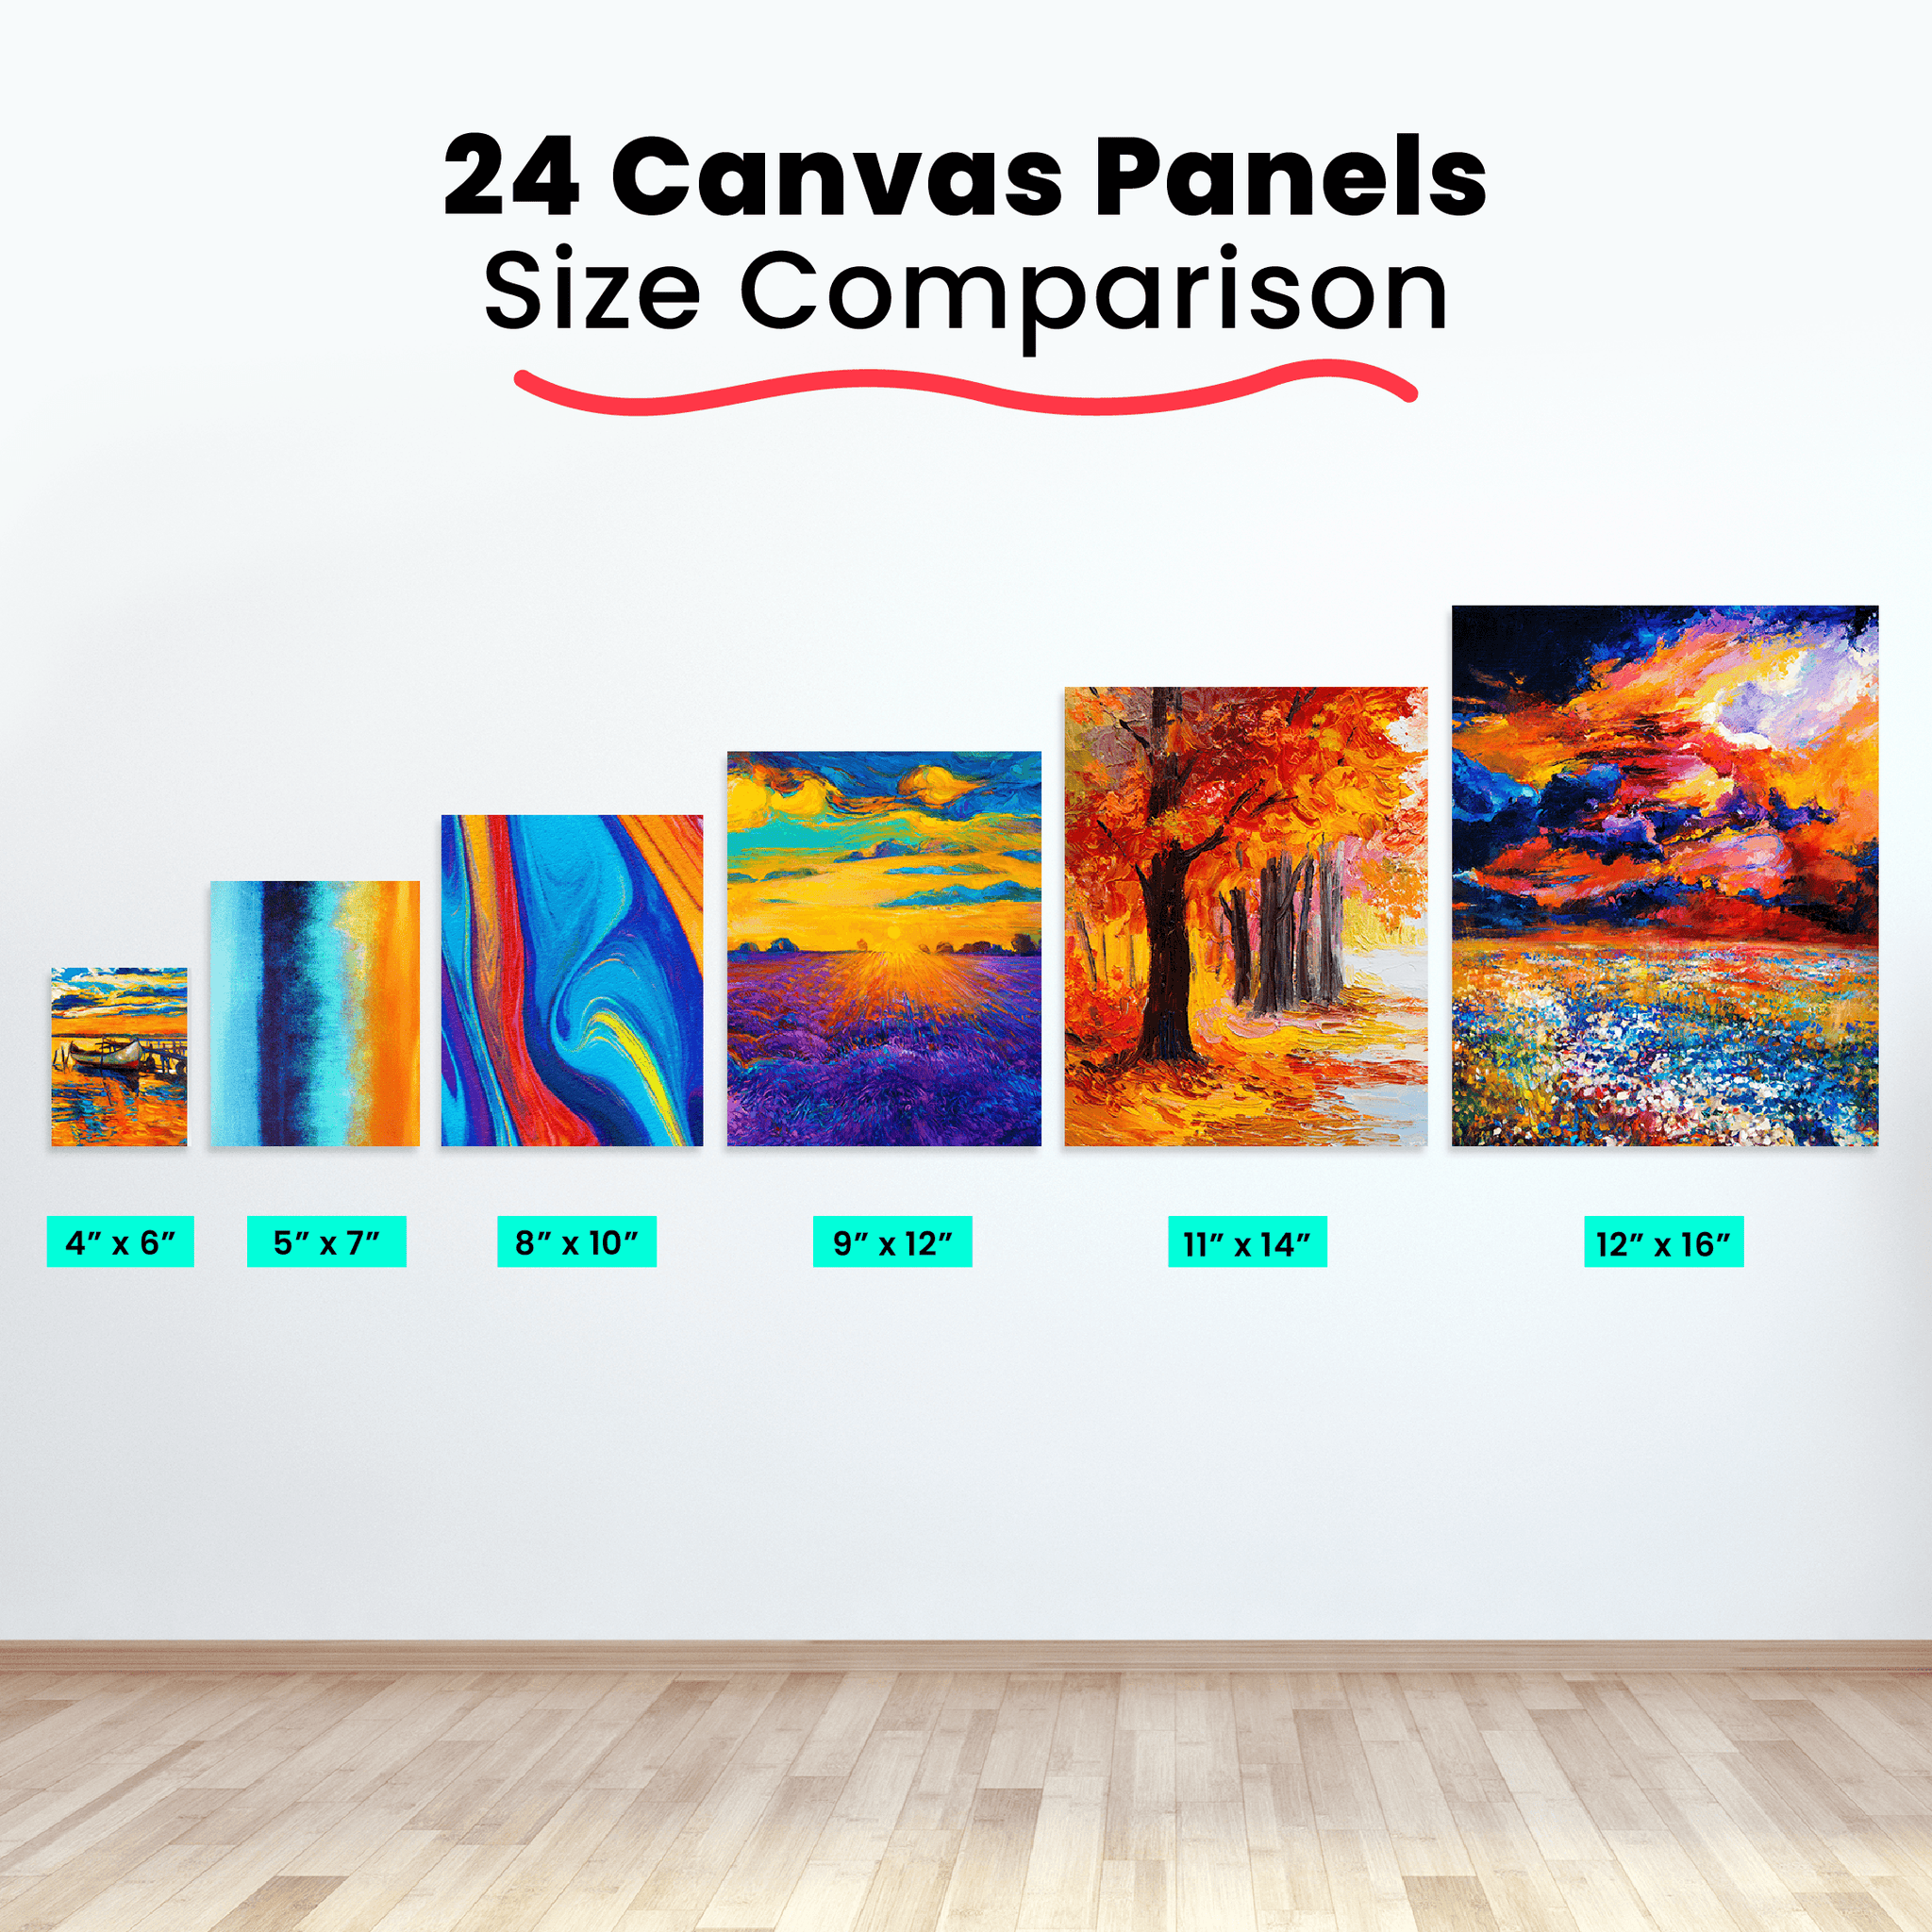 Art Alternatives Canvas Panel Super Value 11x14 Pack of 5